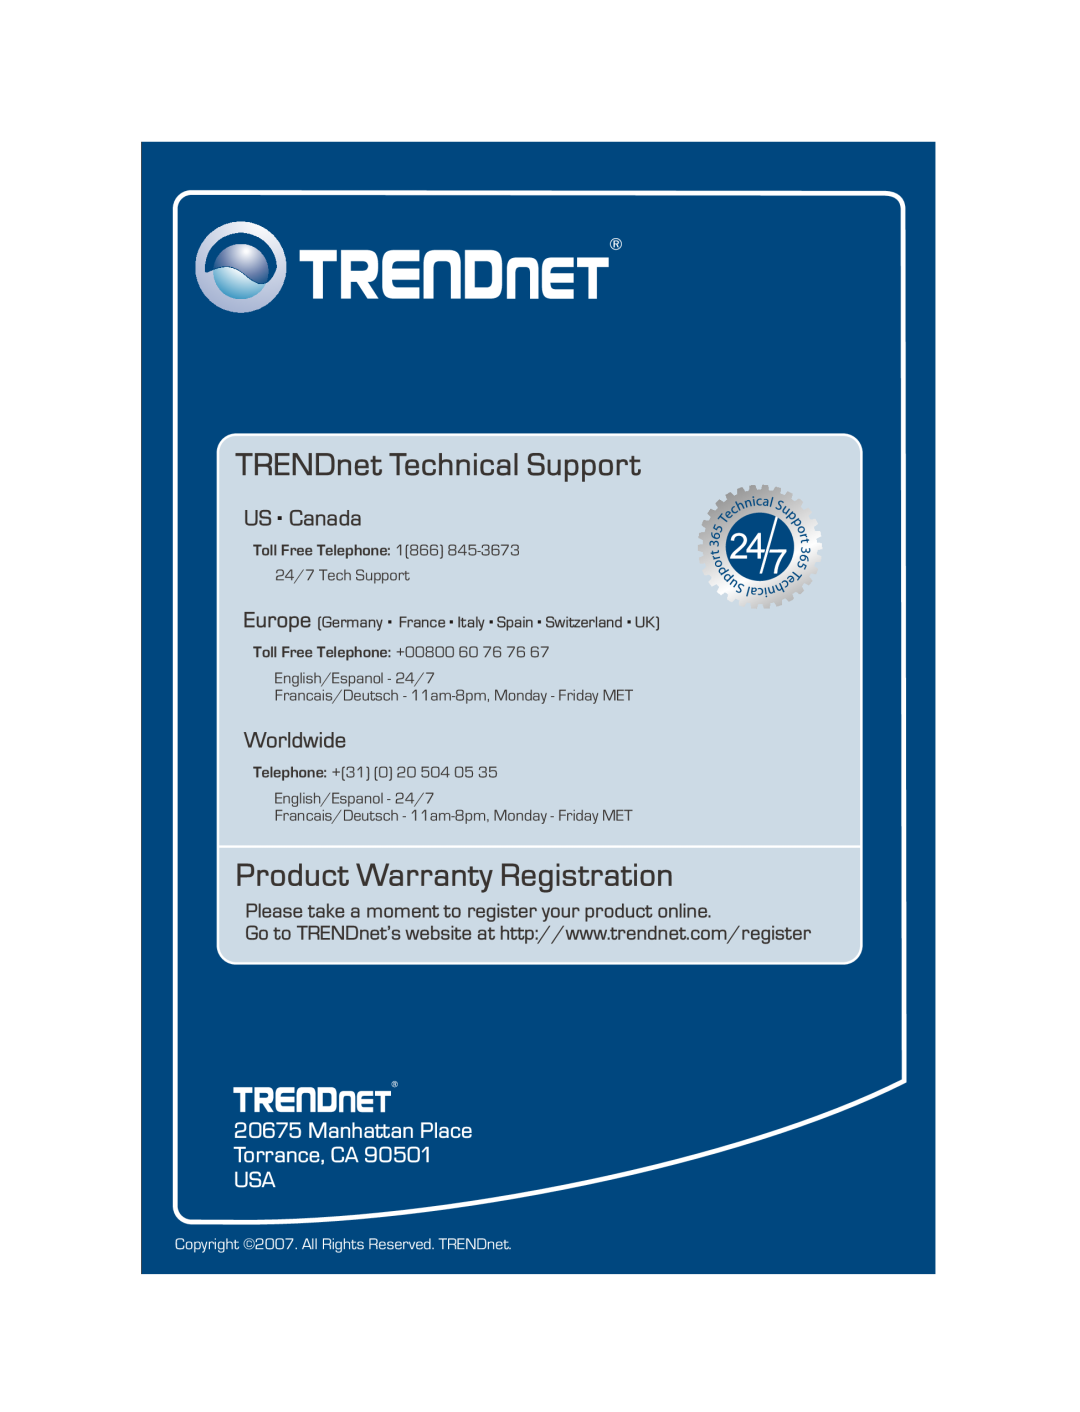 TRENDnet TV-IP212 Manhattan Place Torrance, CA USA, TRENDnet Technical Support, Product Warranty Registration, US . Canada 